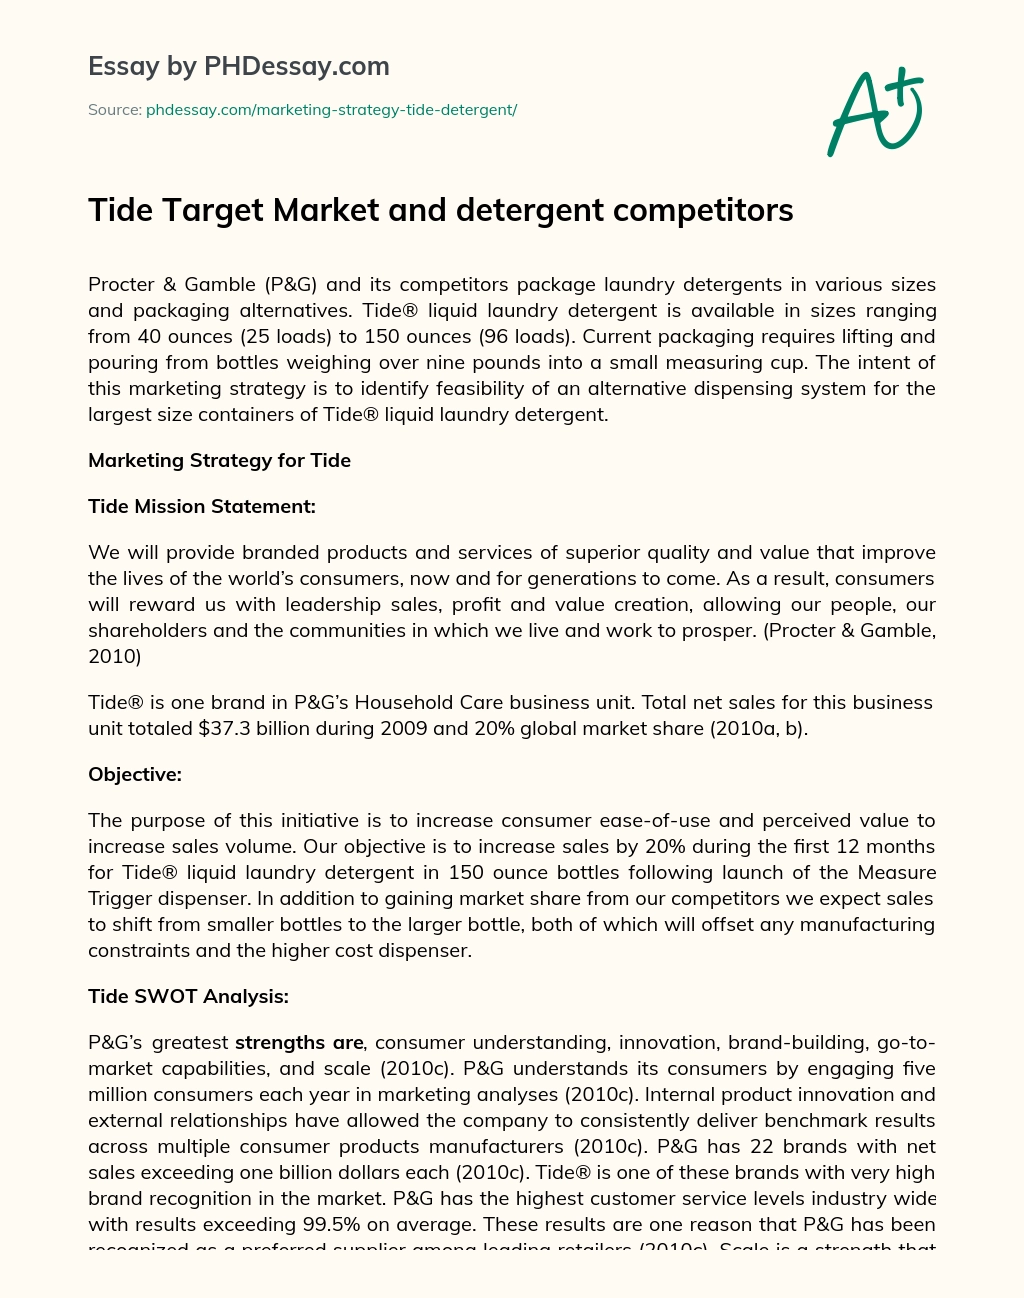 Tide Target Market and detergent competitors essay